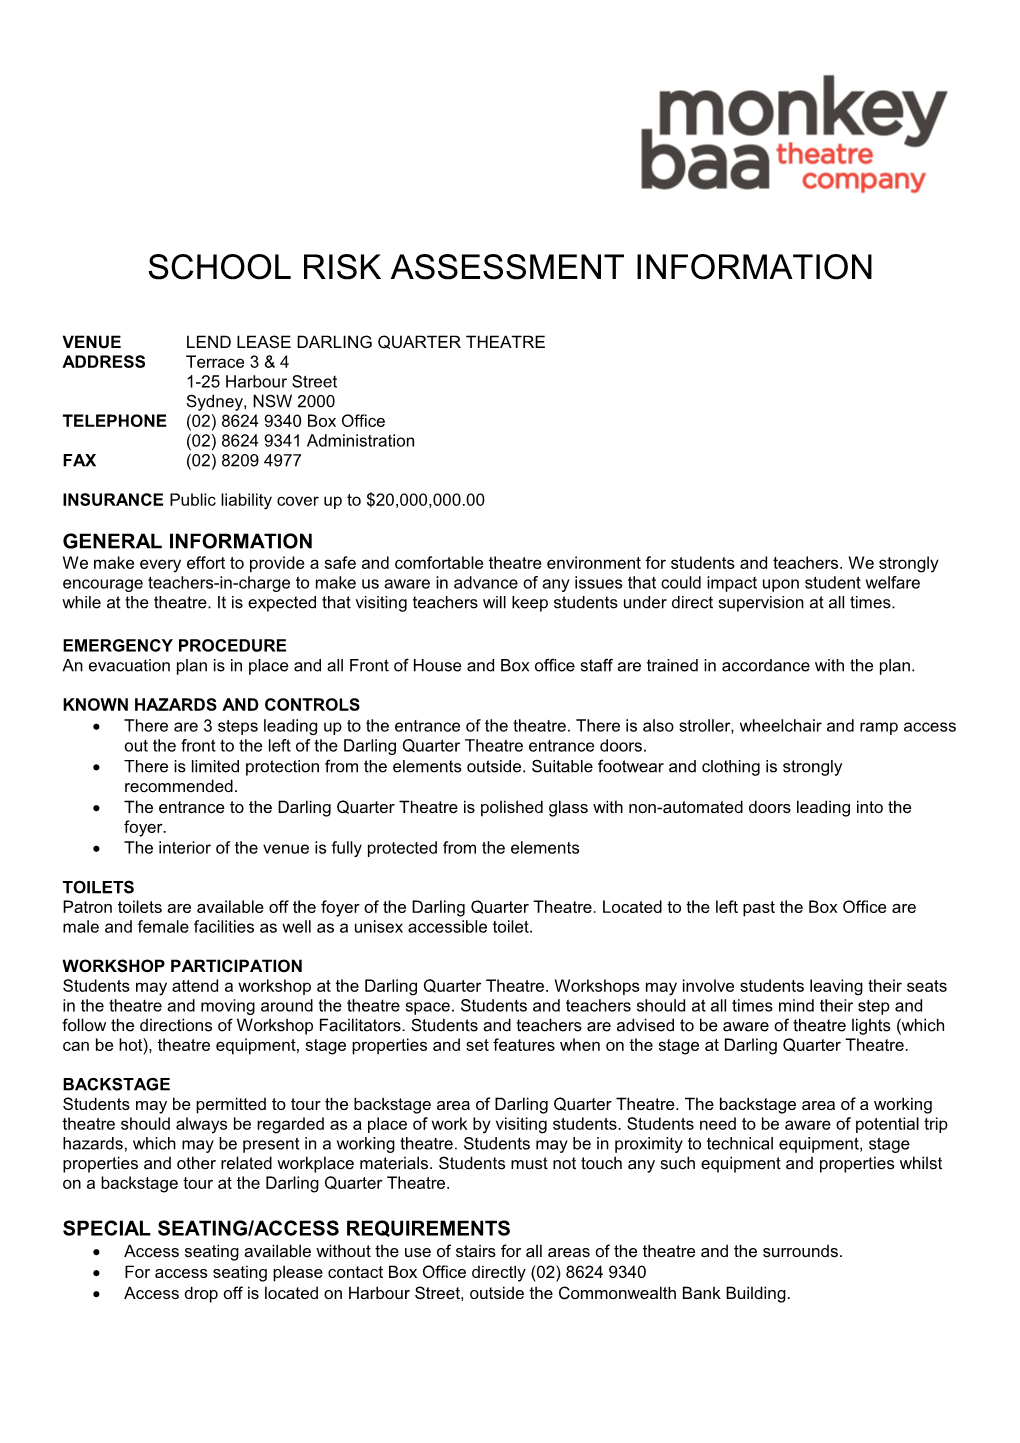 School Risk Assessment Information